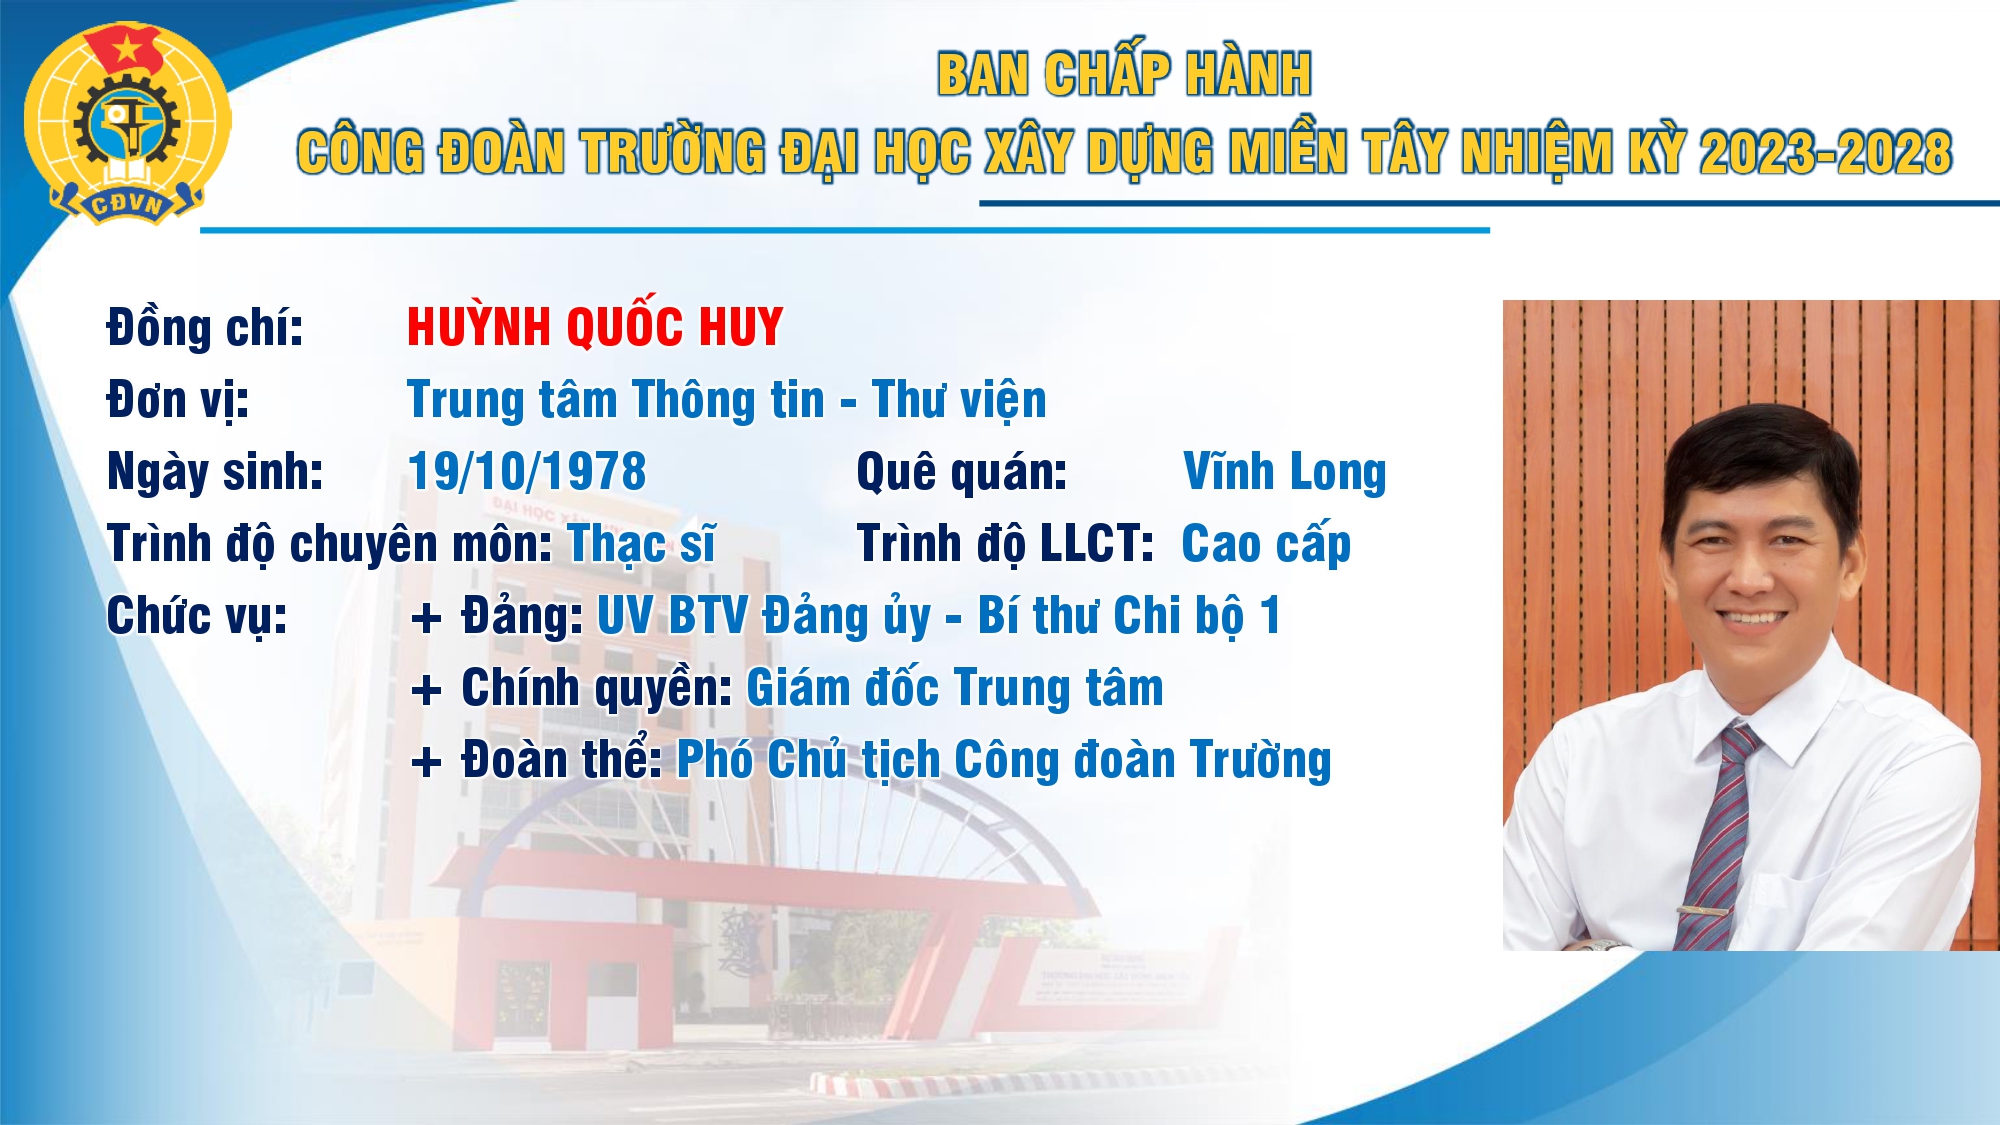 DANH SACH BCH HOI SINH VIEN 2015-page-003